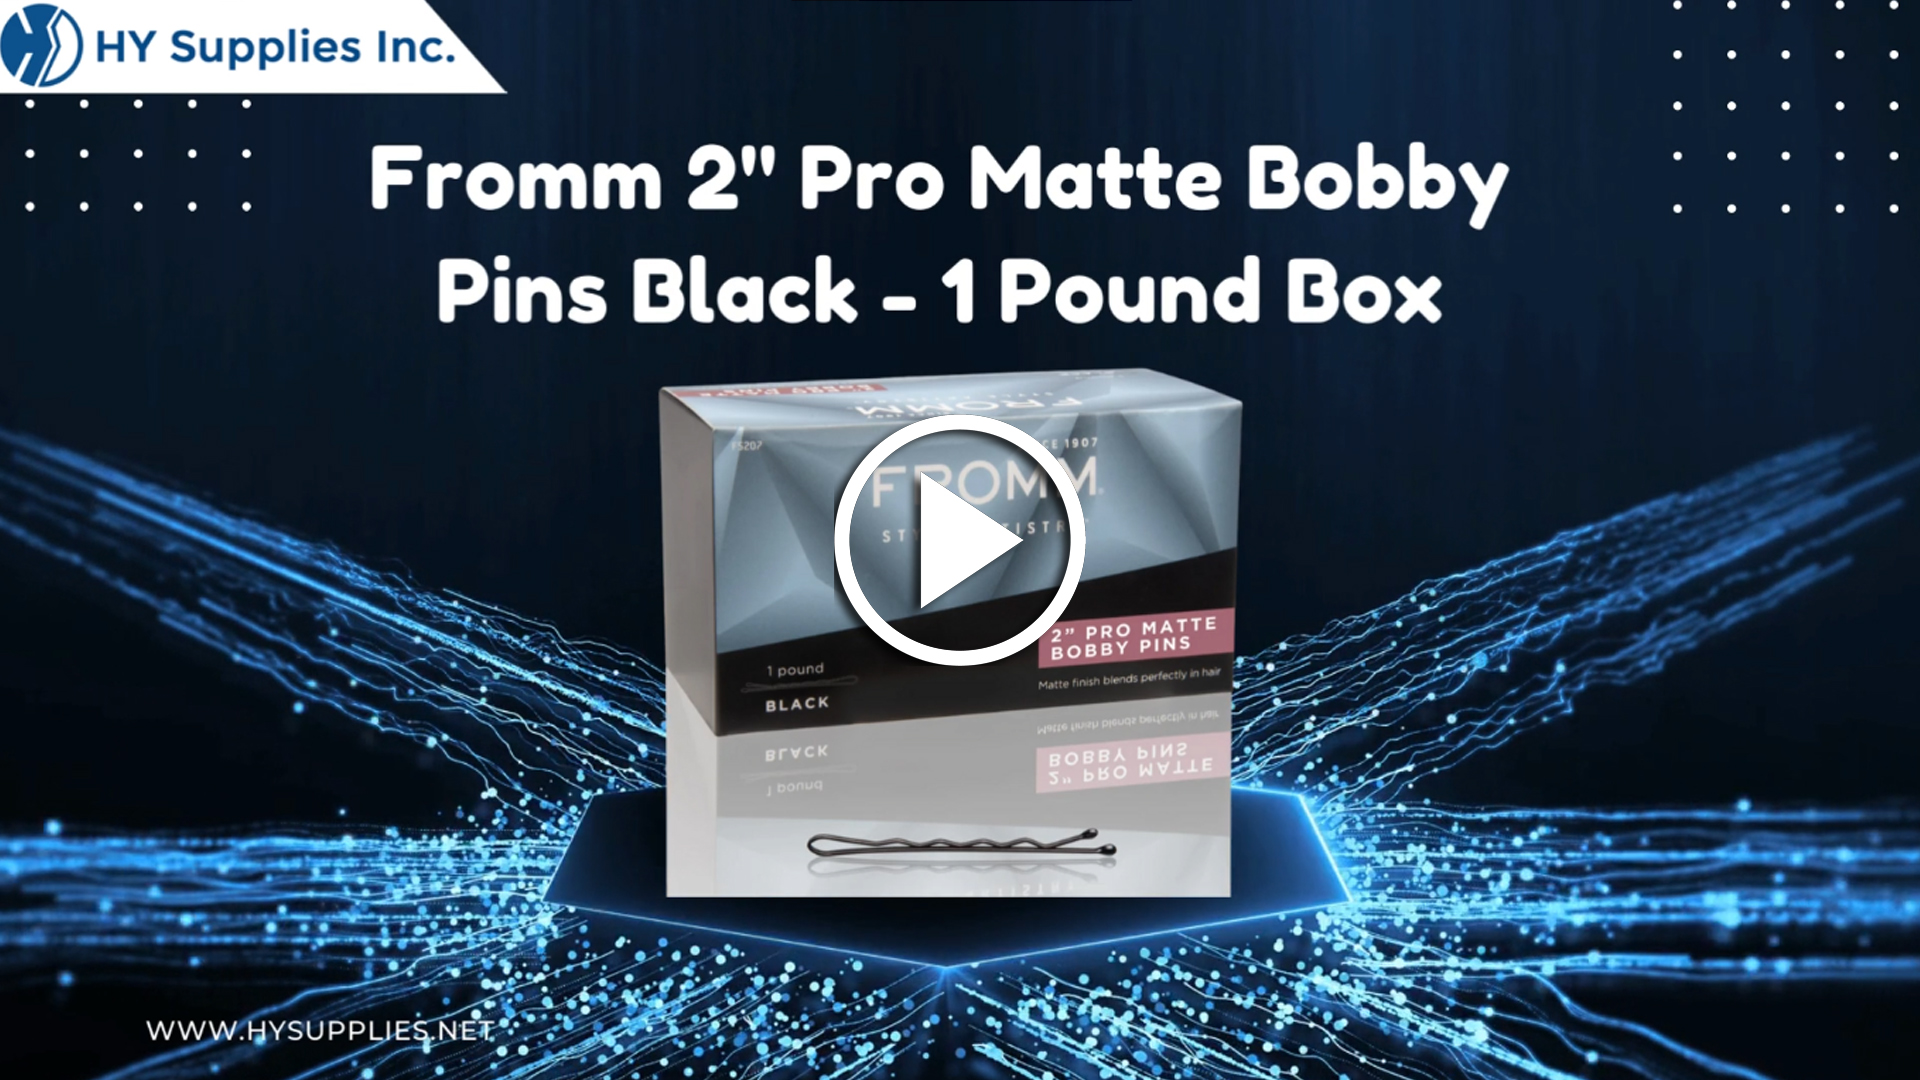 Fromm 2" Pro Matte Bobby Pins Black - 1 Pound Box